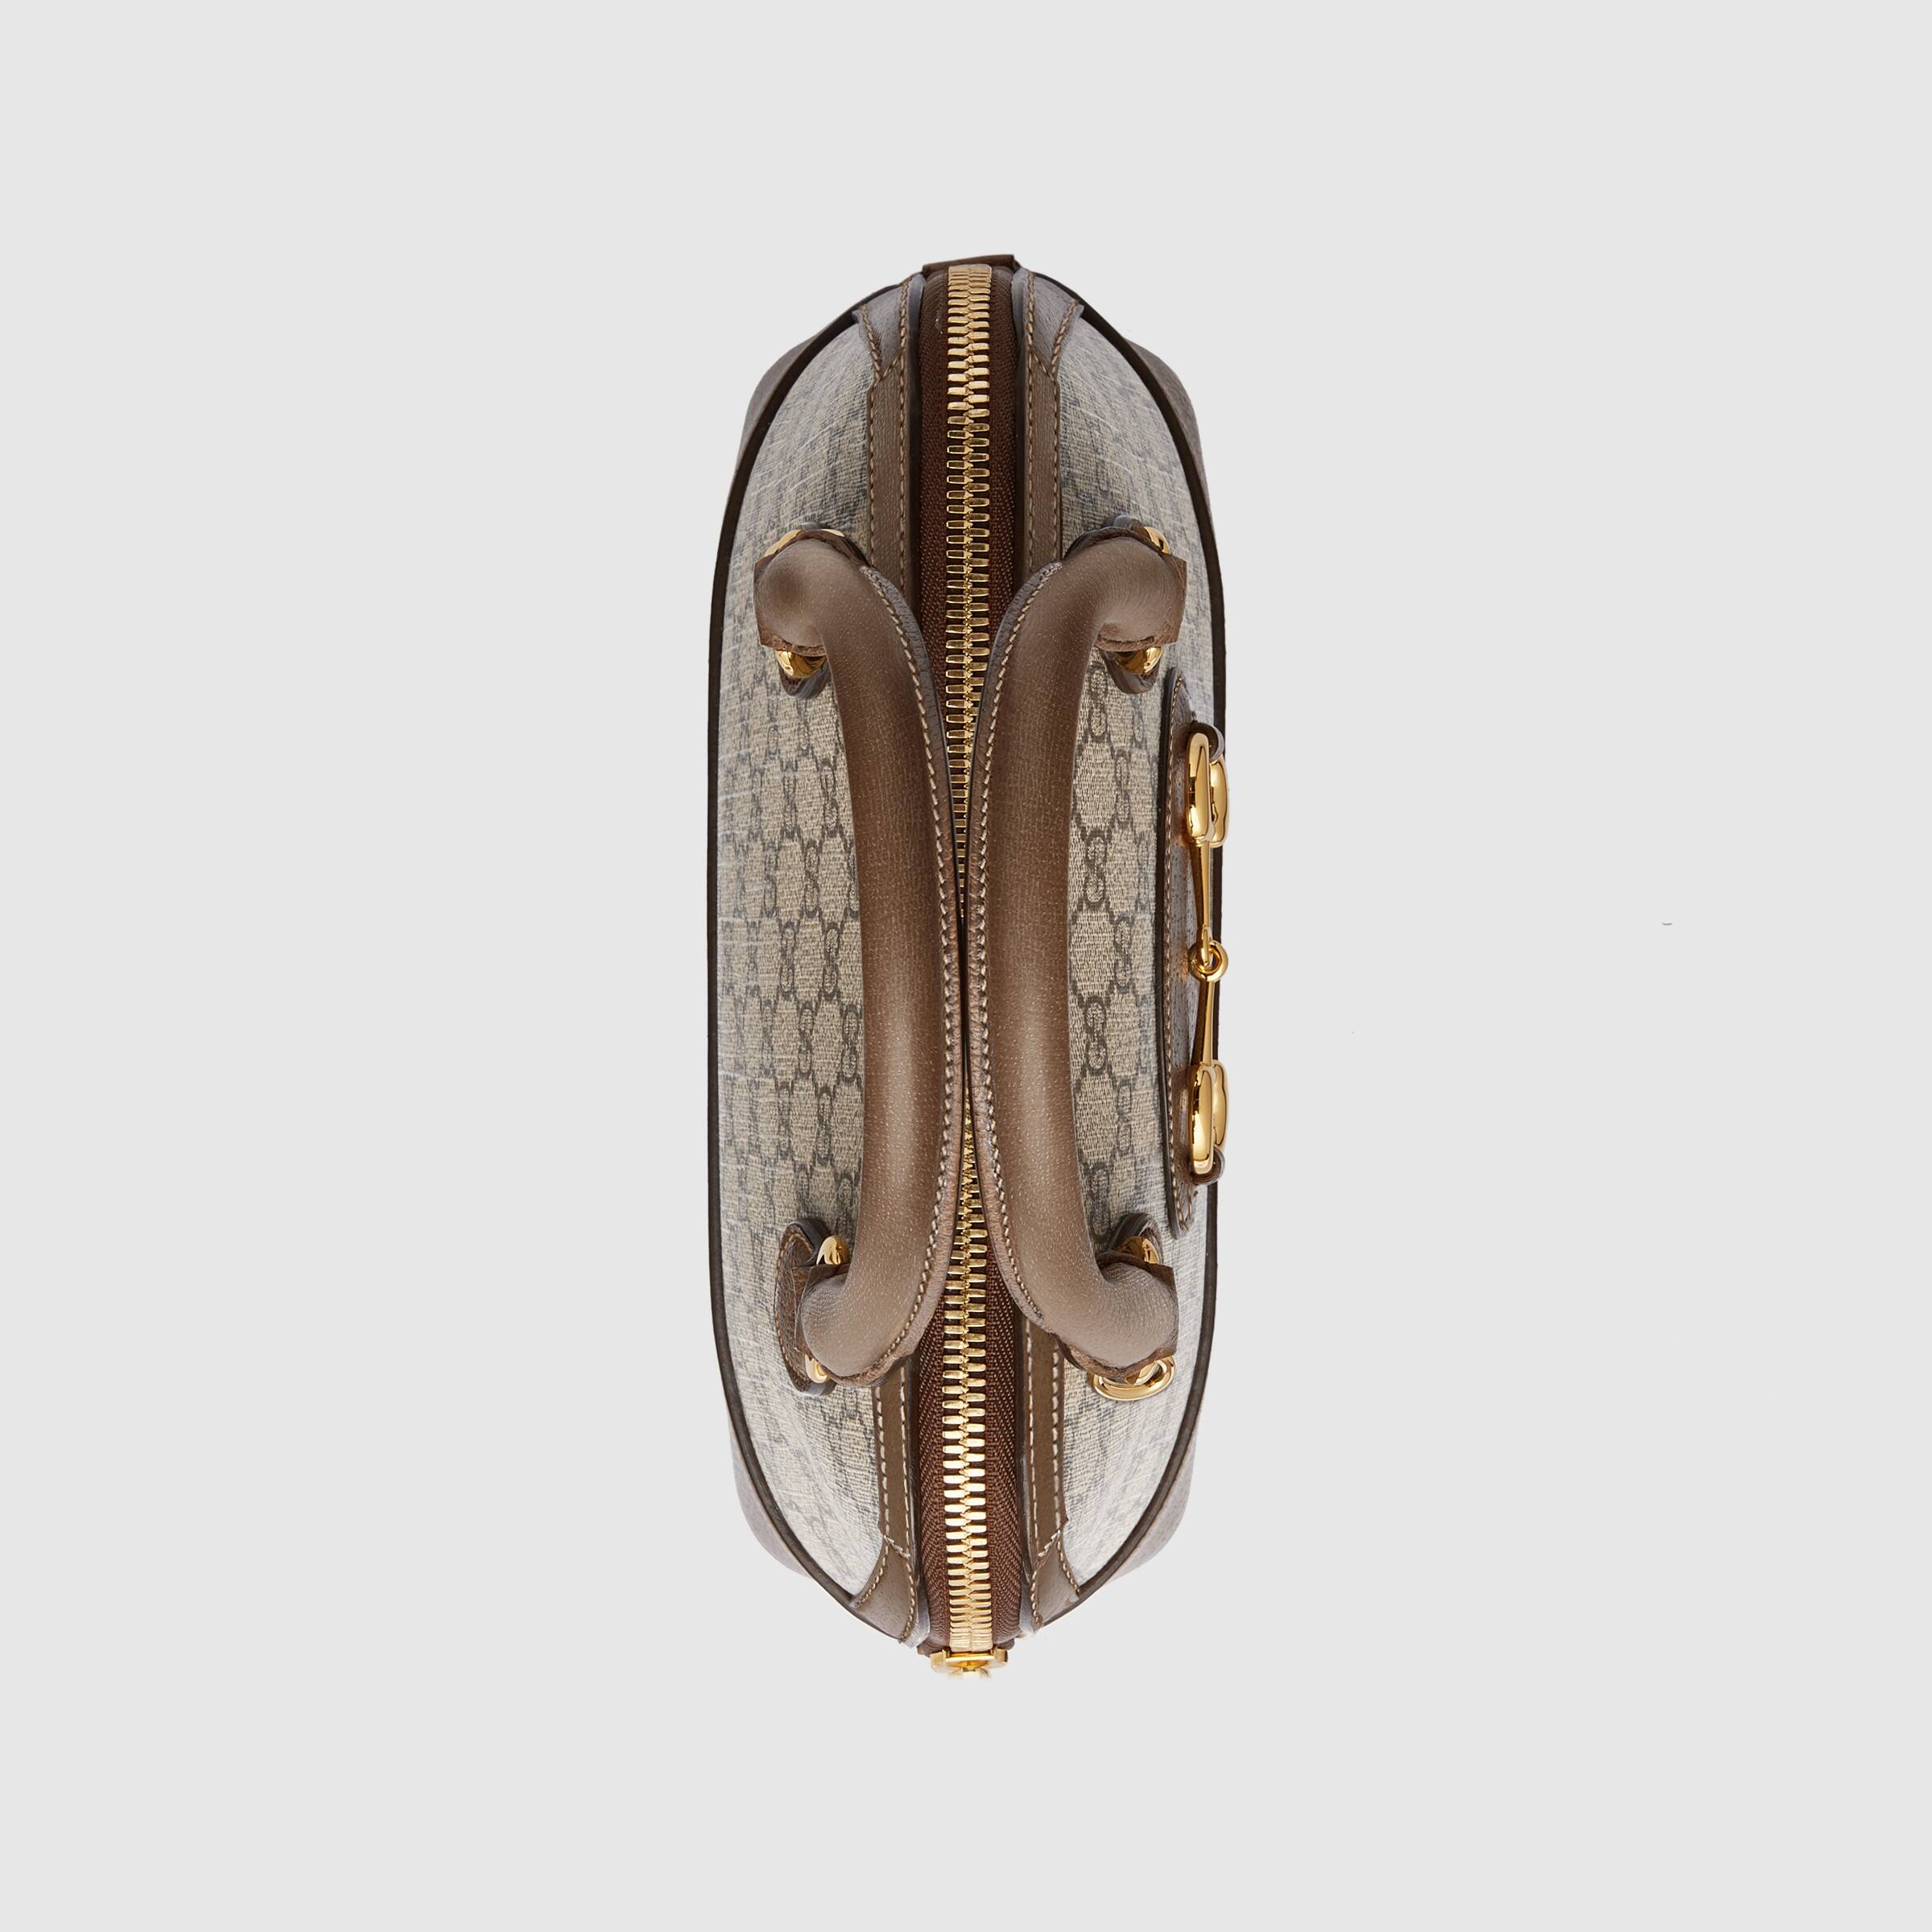 Gucci 1955 Horsebit Small Top Handle Bag GG Supreme